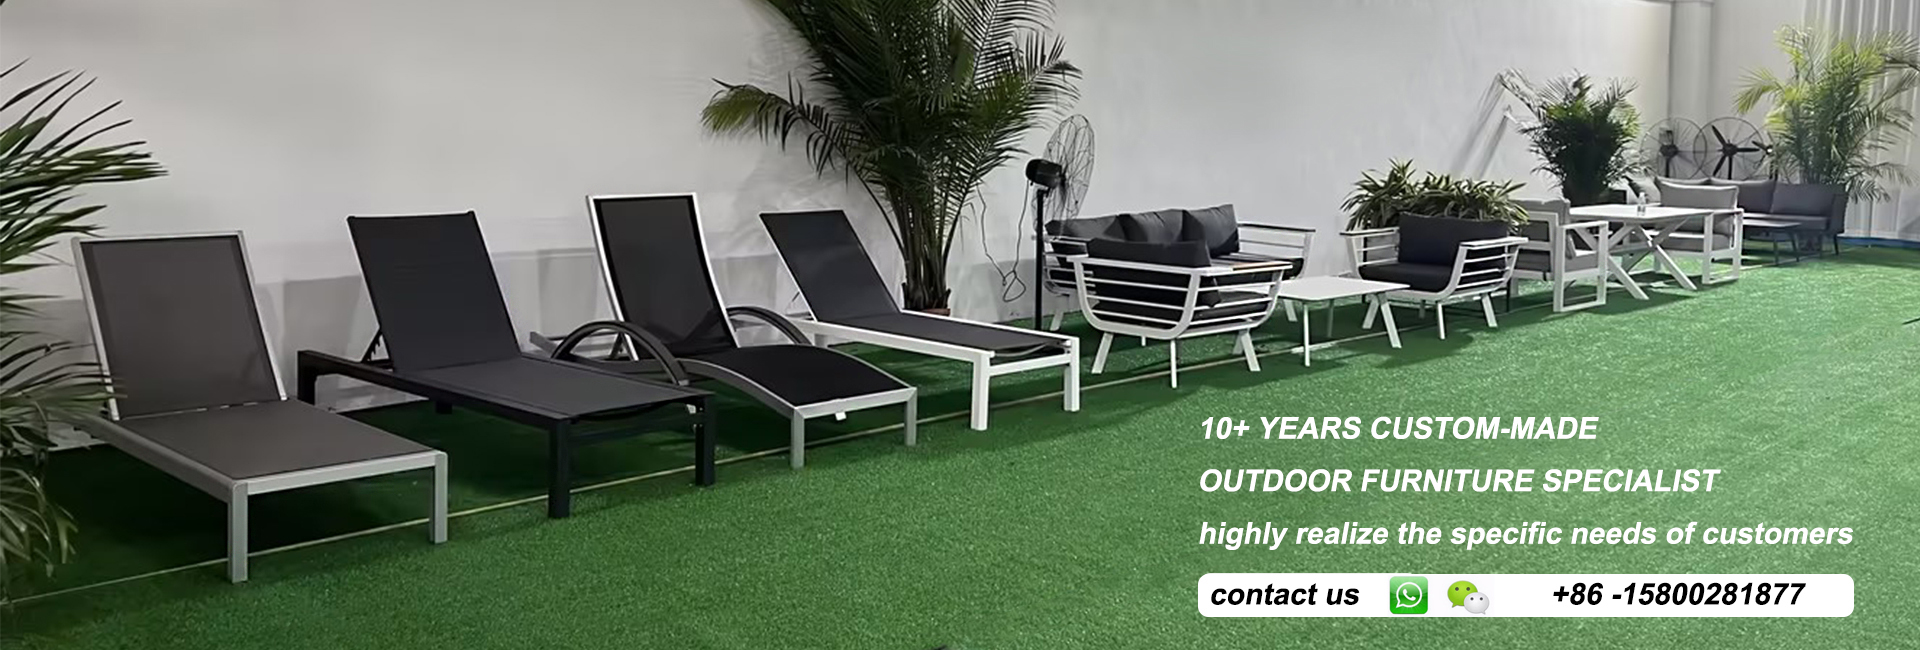 10+ years outdoor furniture supplier